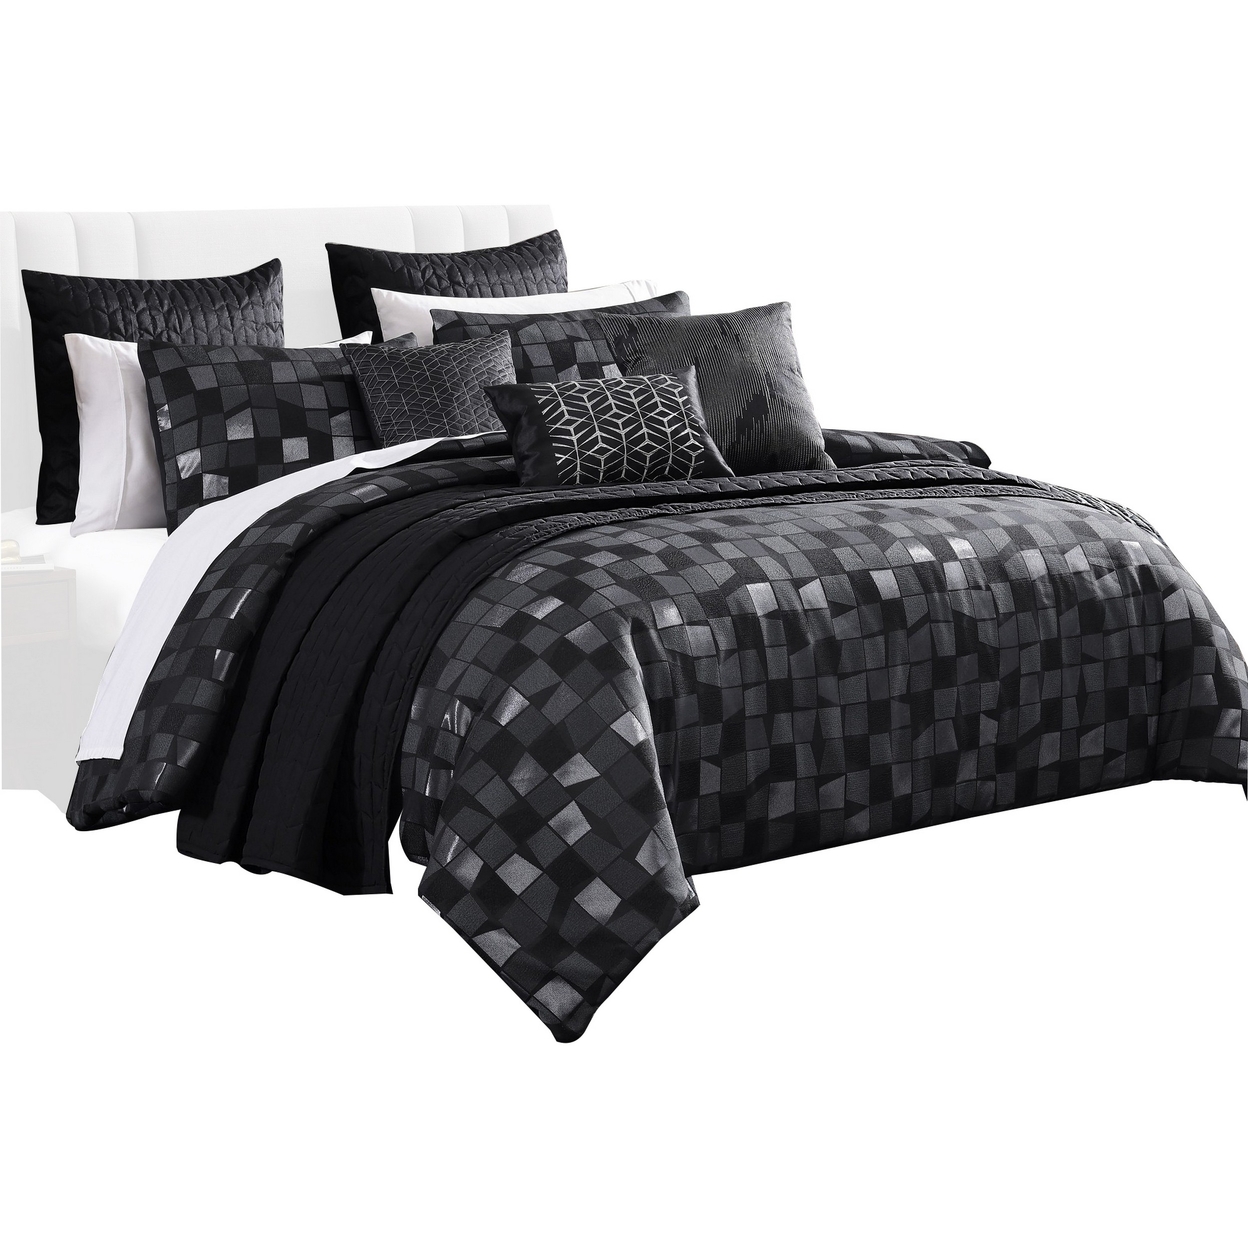 Eve 10 Piece Queen Comforter Set, 3 Pillows, Luxurious Black Woven Jacquard - Saltoro Sherpi